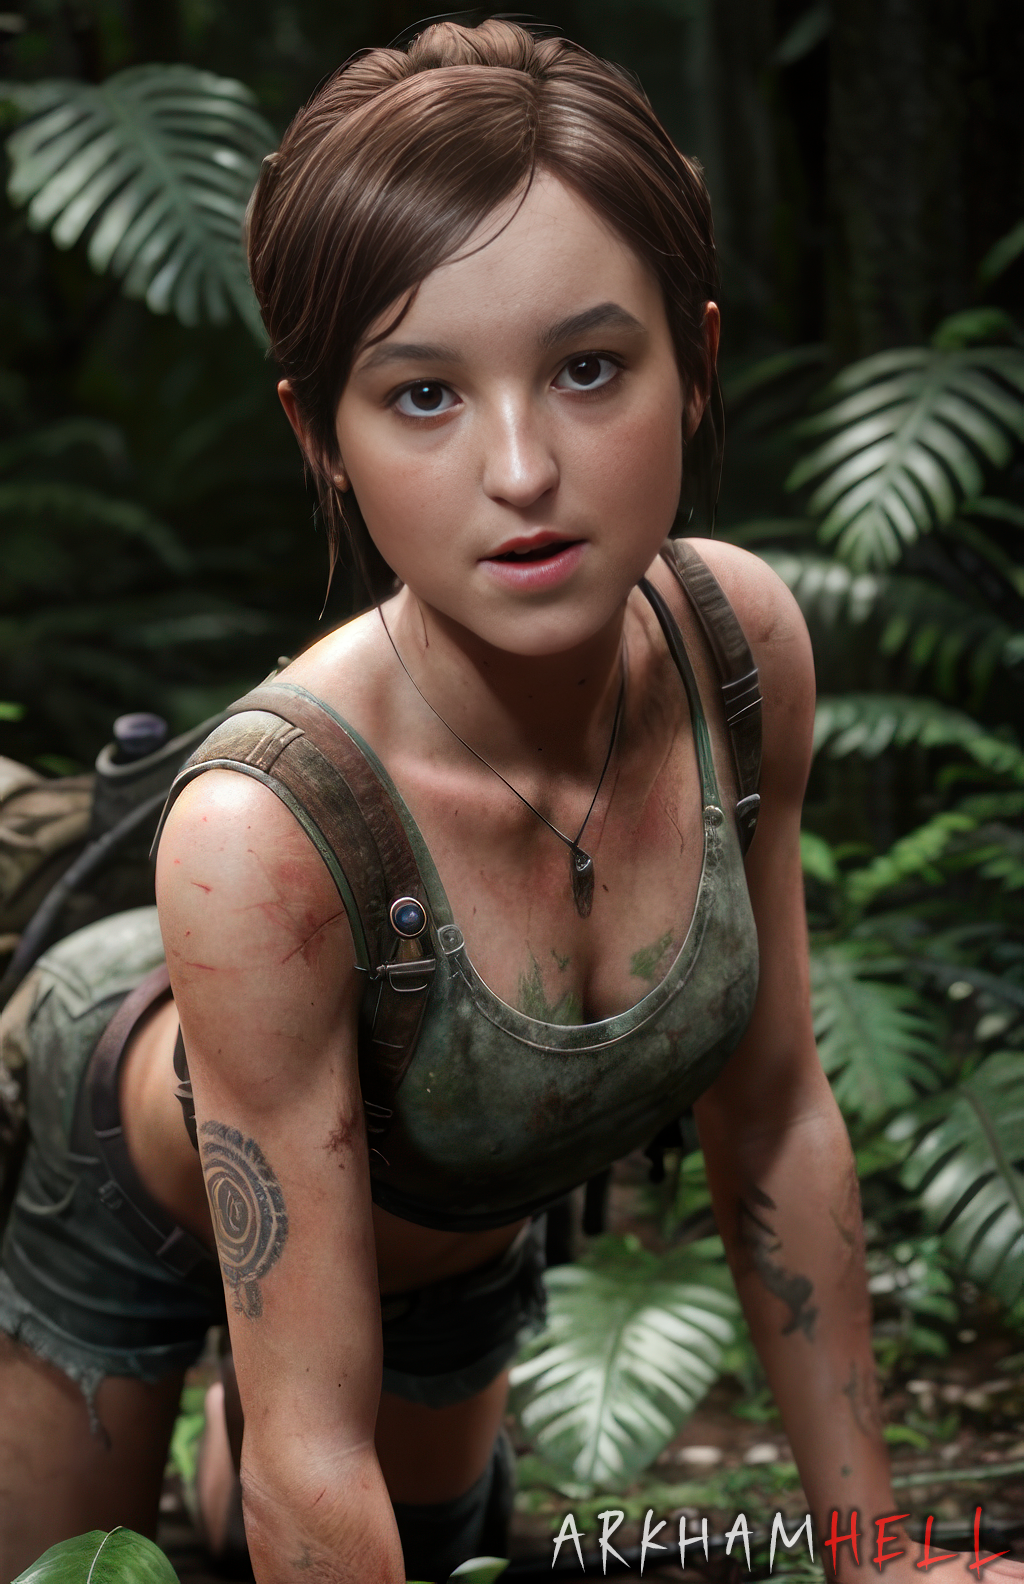 Ellie from The Last Of Us 2 by MasterEroan on DeviantArt